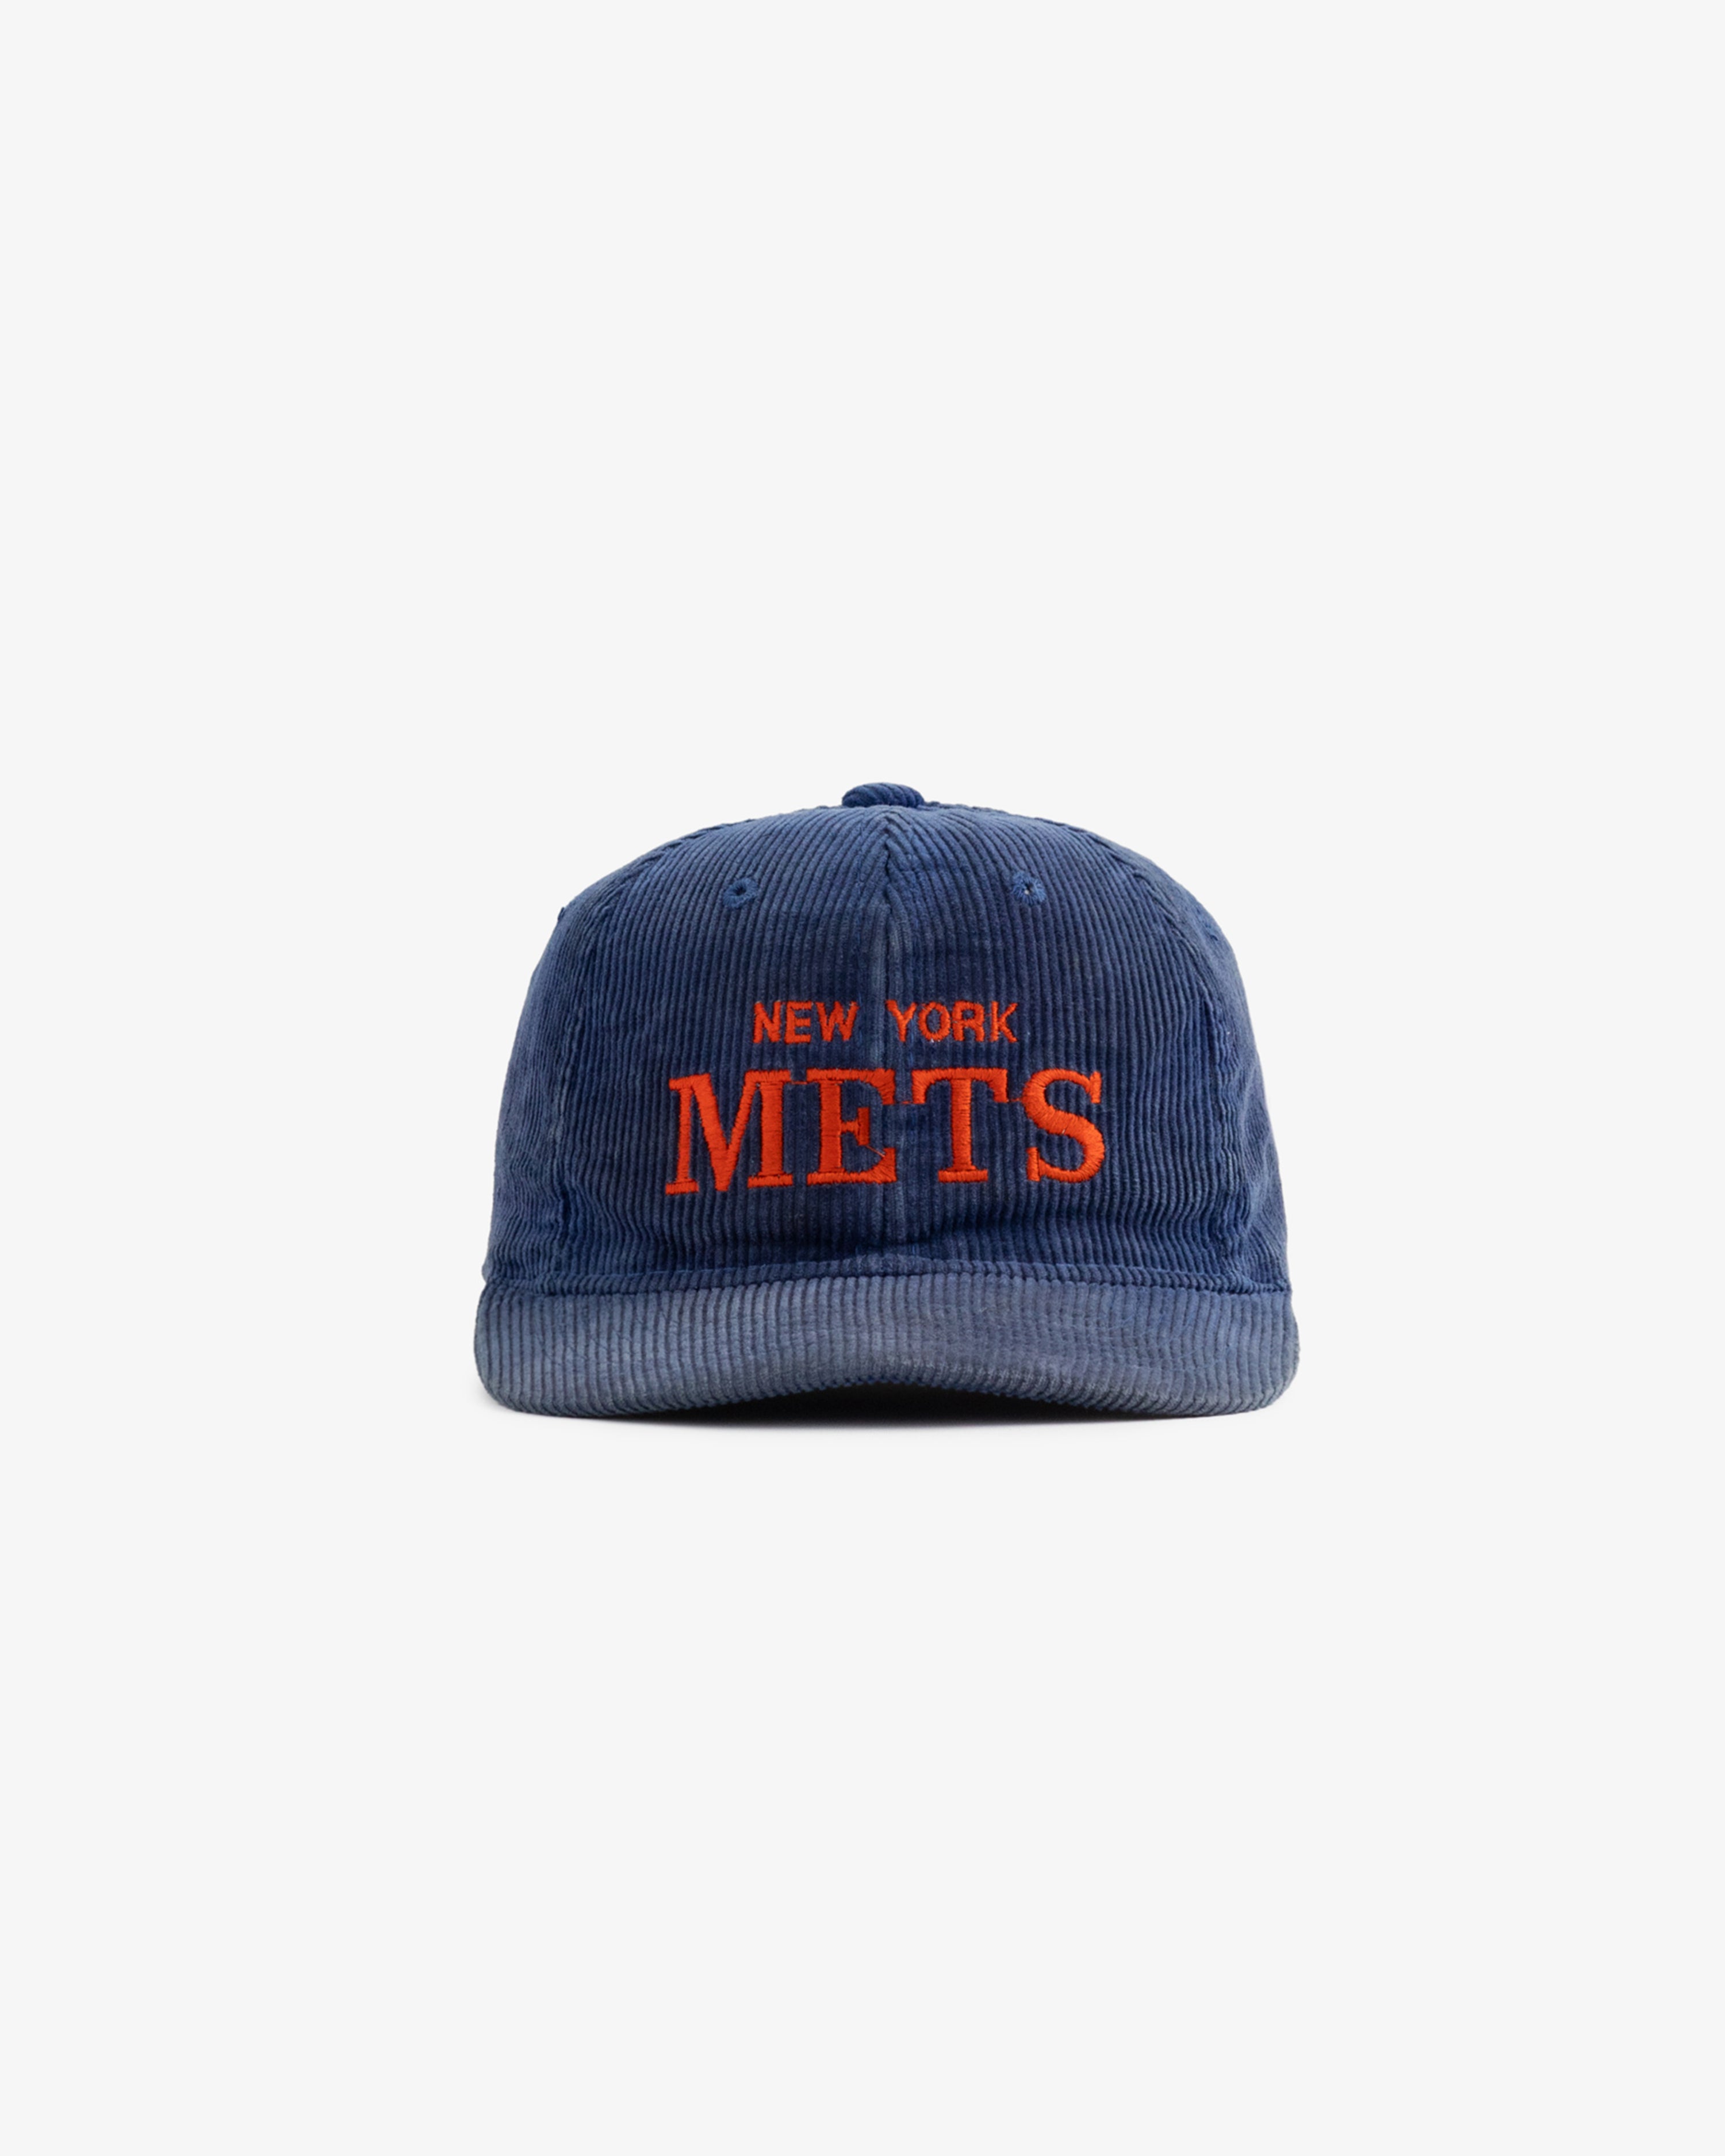 Vintage New York Mets Hat at AimeLeonDore.com